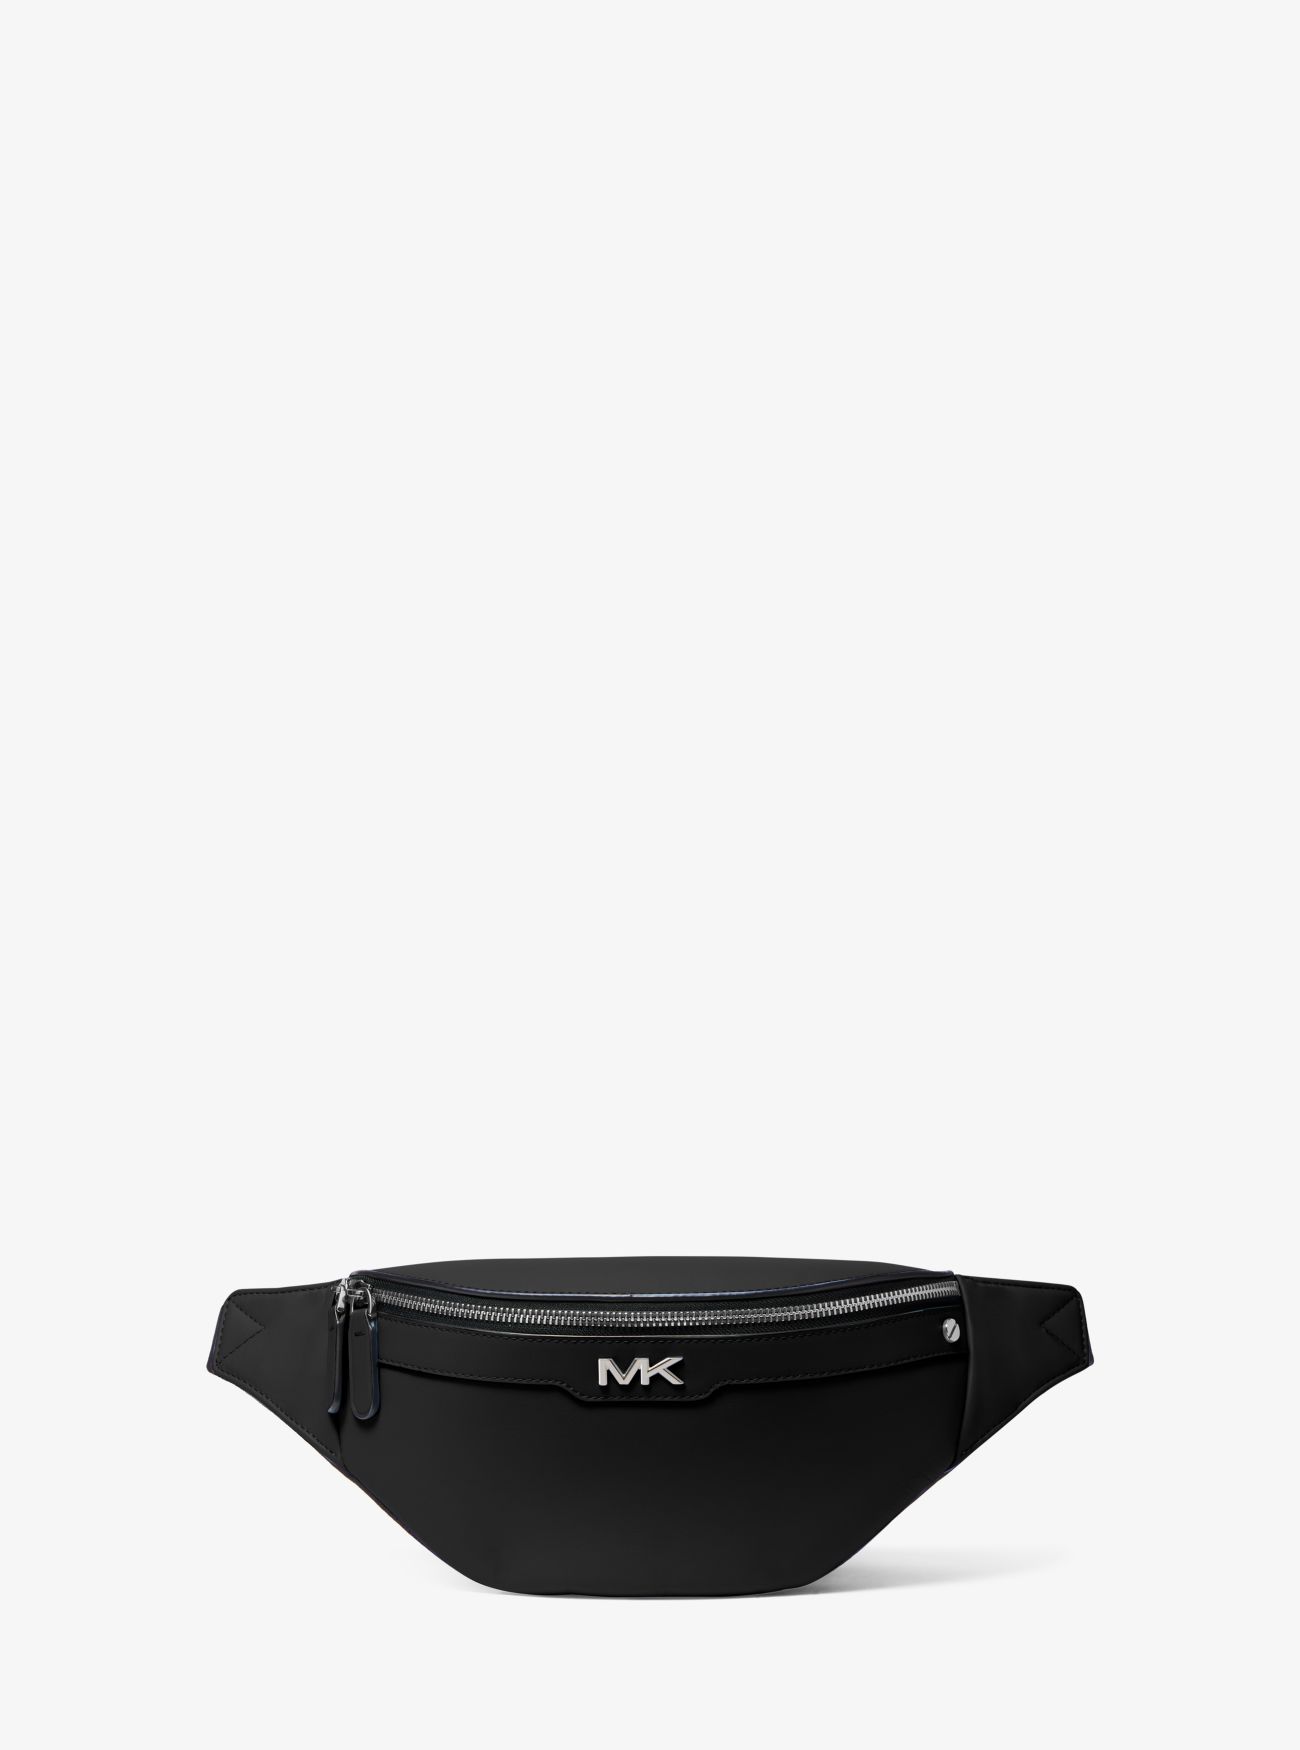 MK Varick Small Leather Belt Bag - Black - Michael Kors